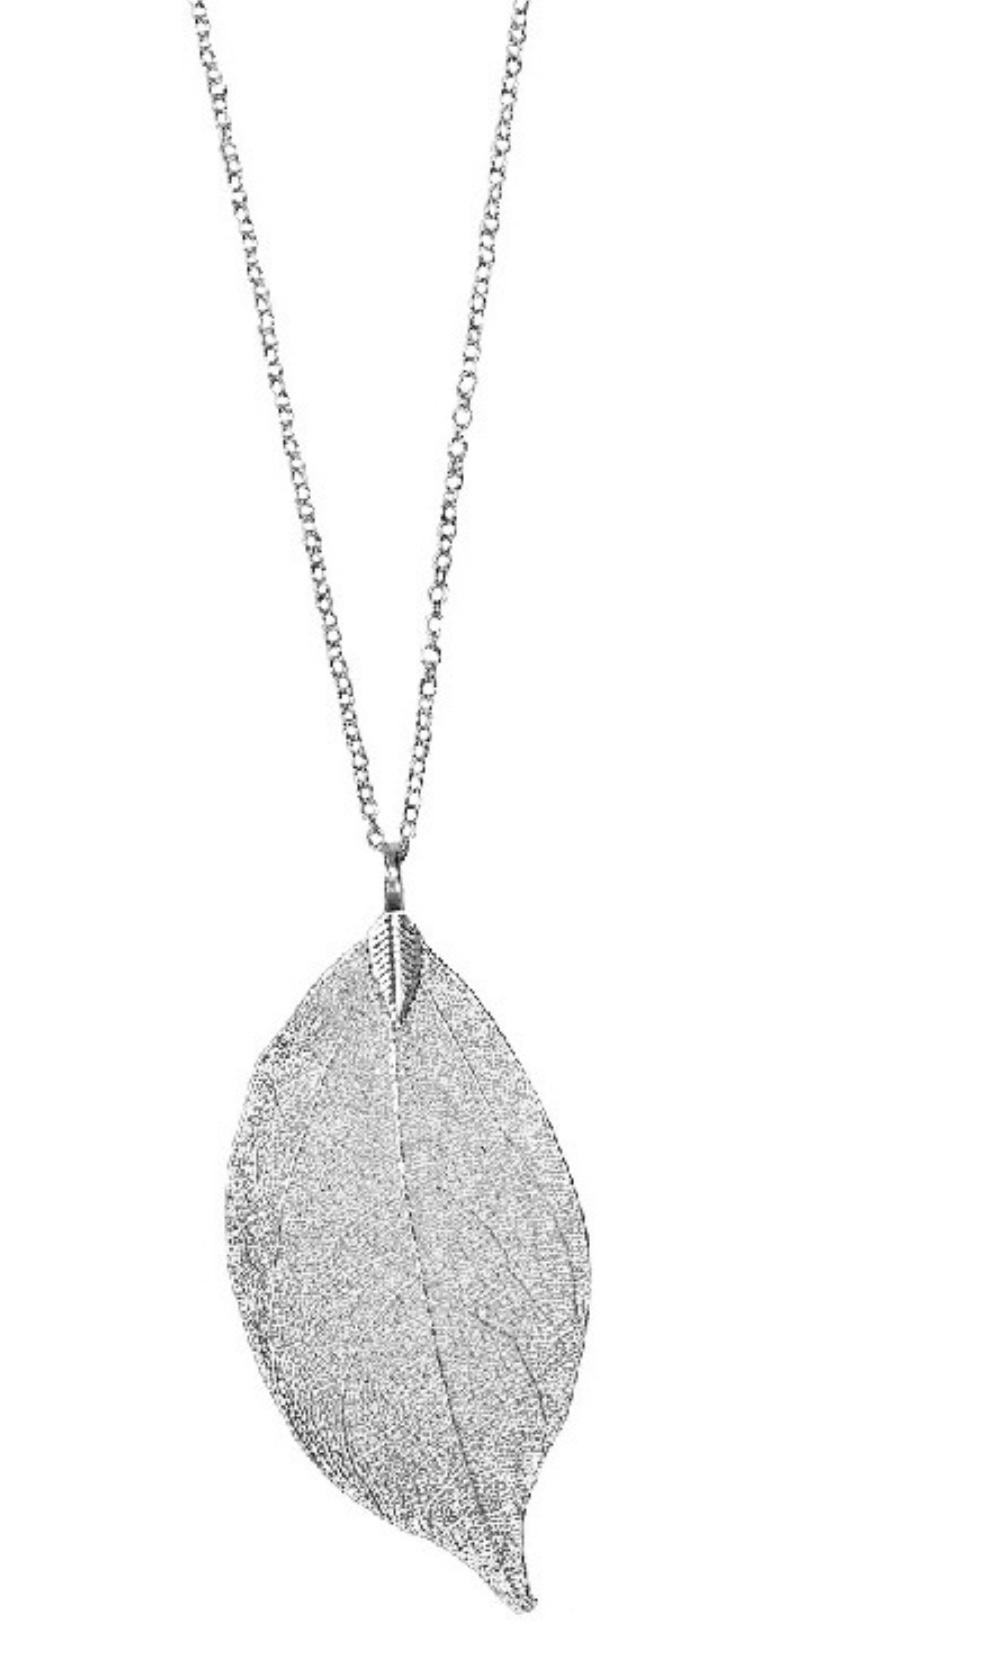 Necklace Delicate Silver Filigree Leaf Pendant Long Necklace